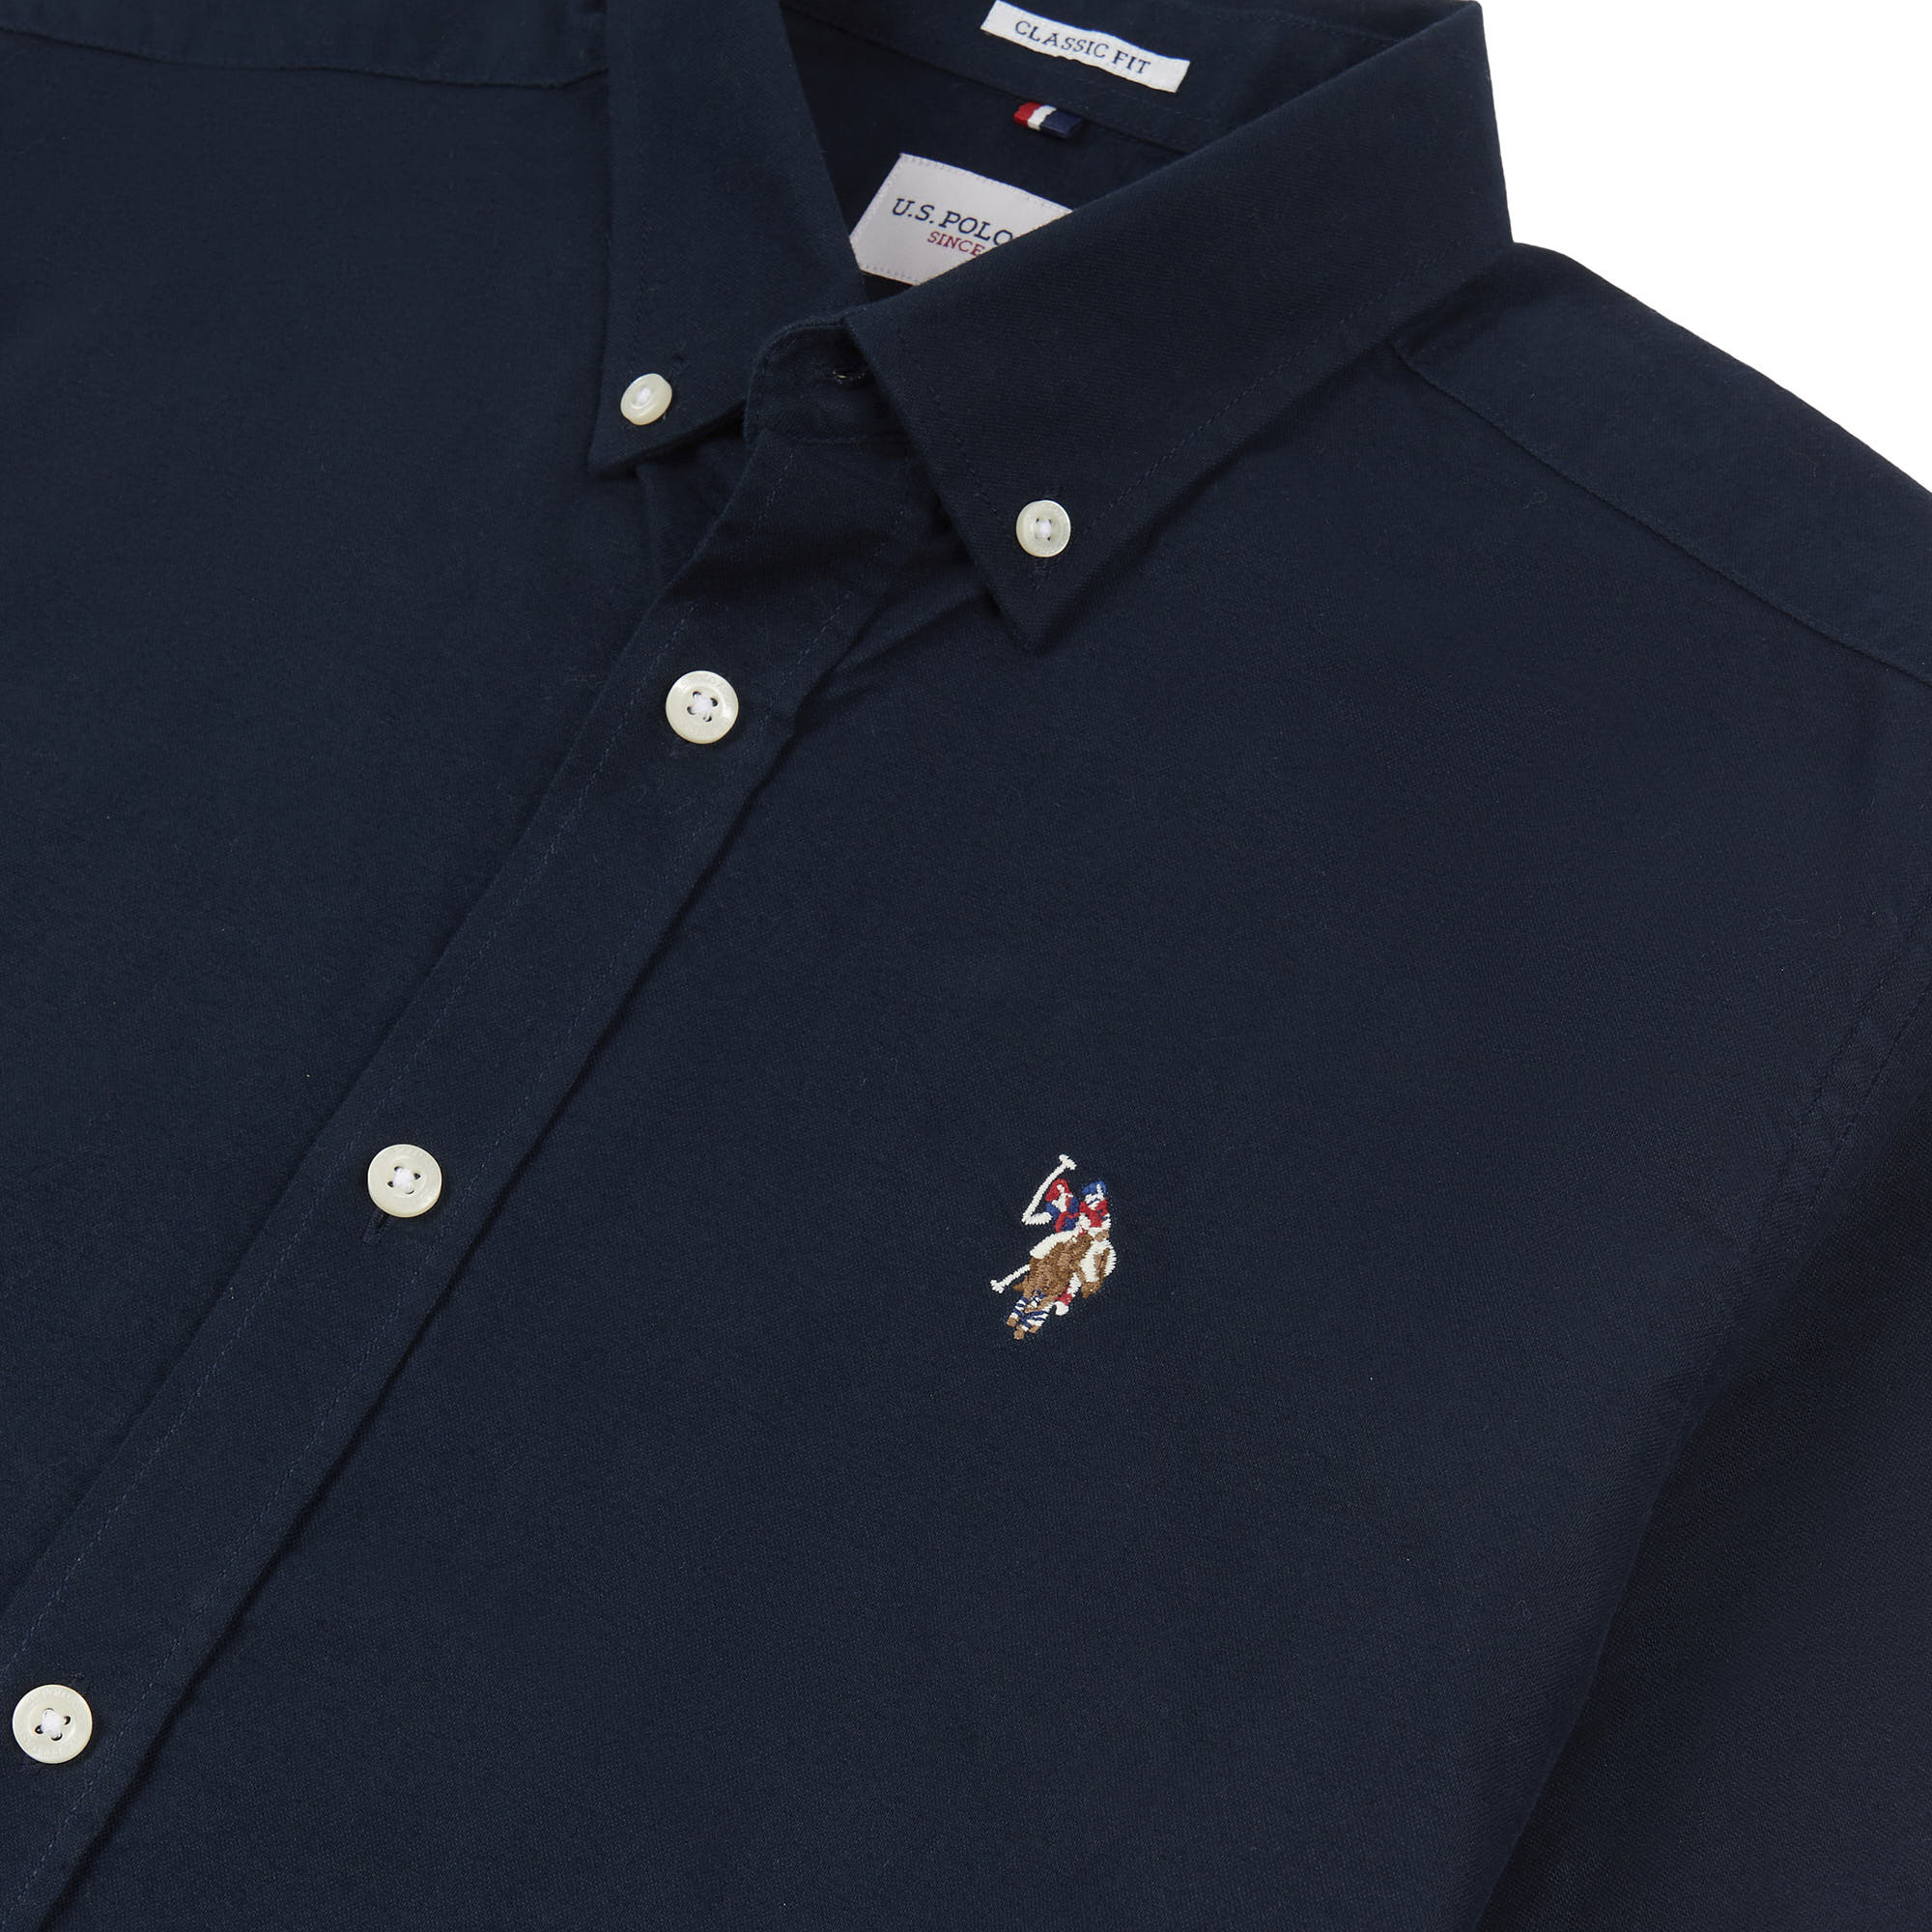 Mens Short Sleeve Oxford Shirt in Dark Sapphire Navy